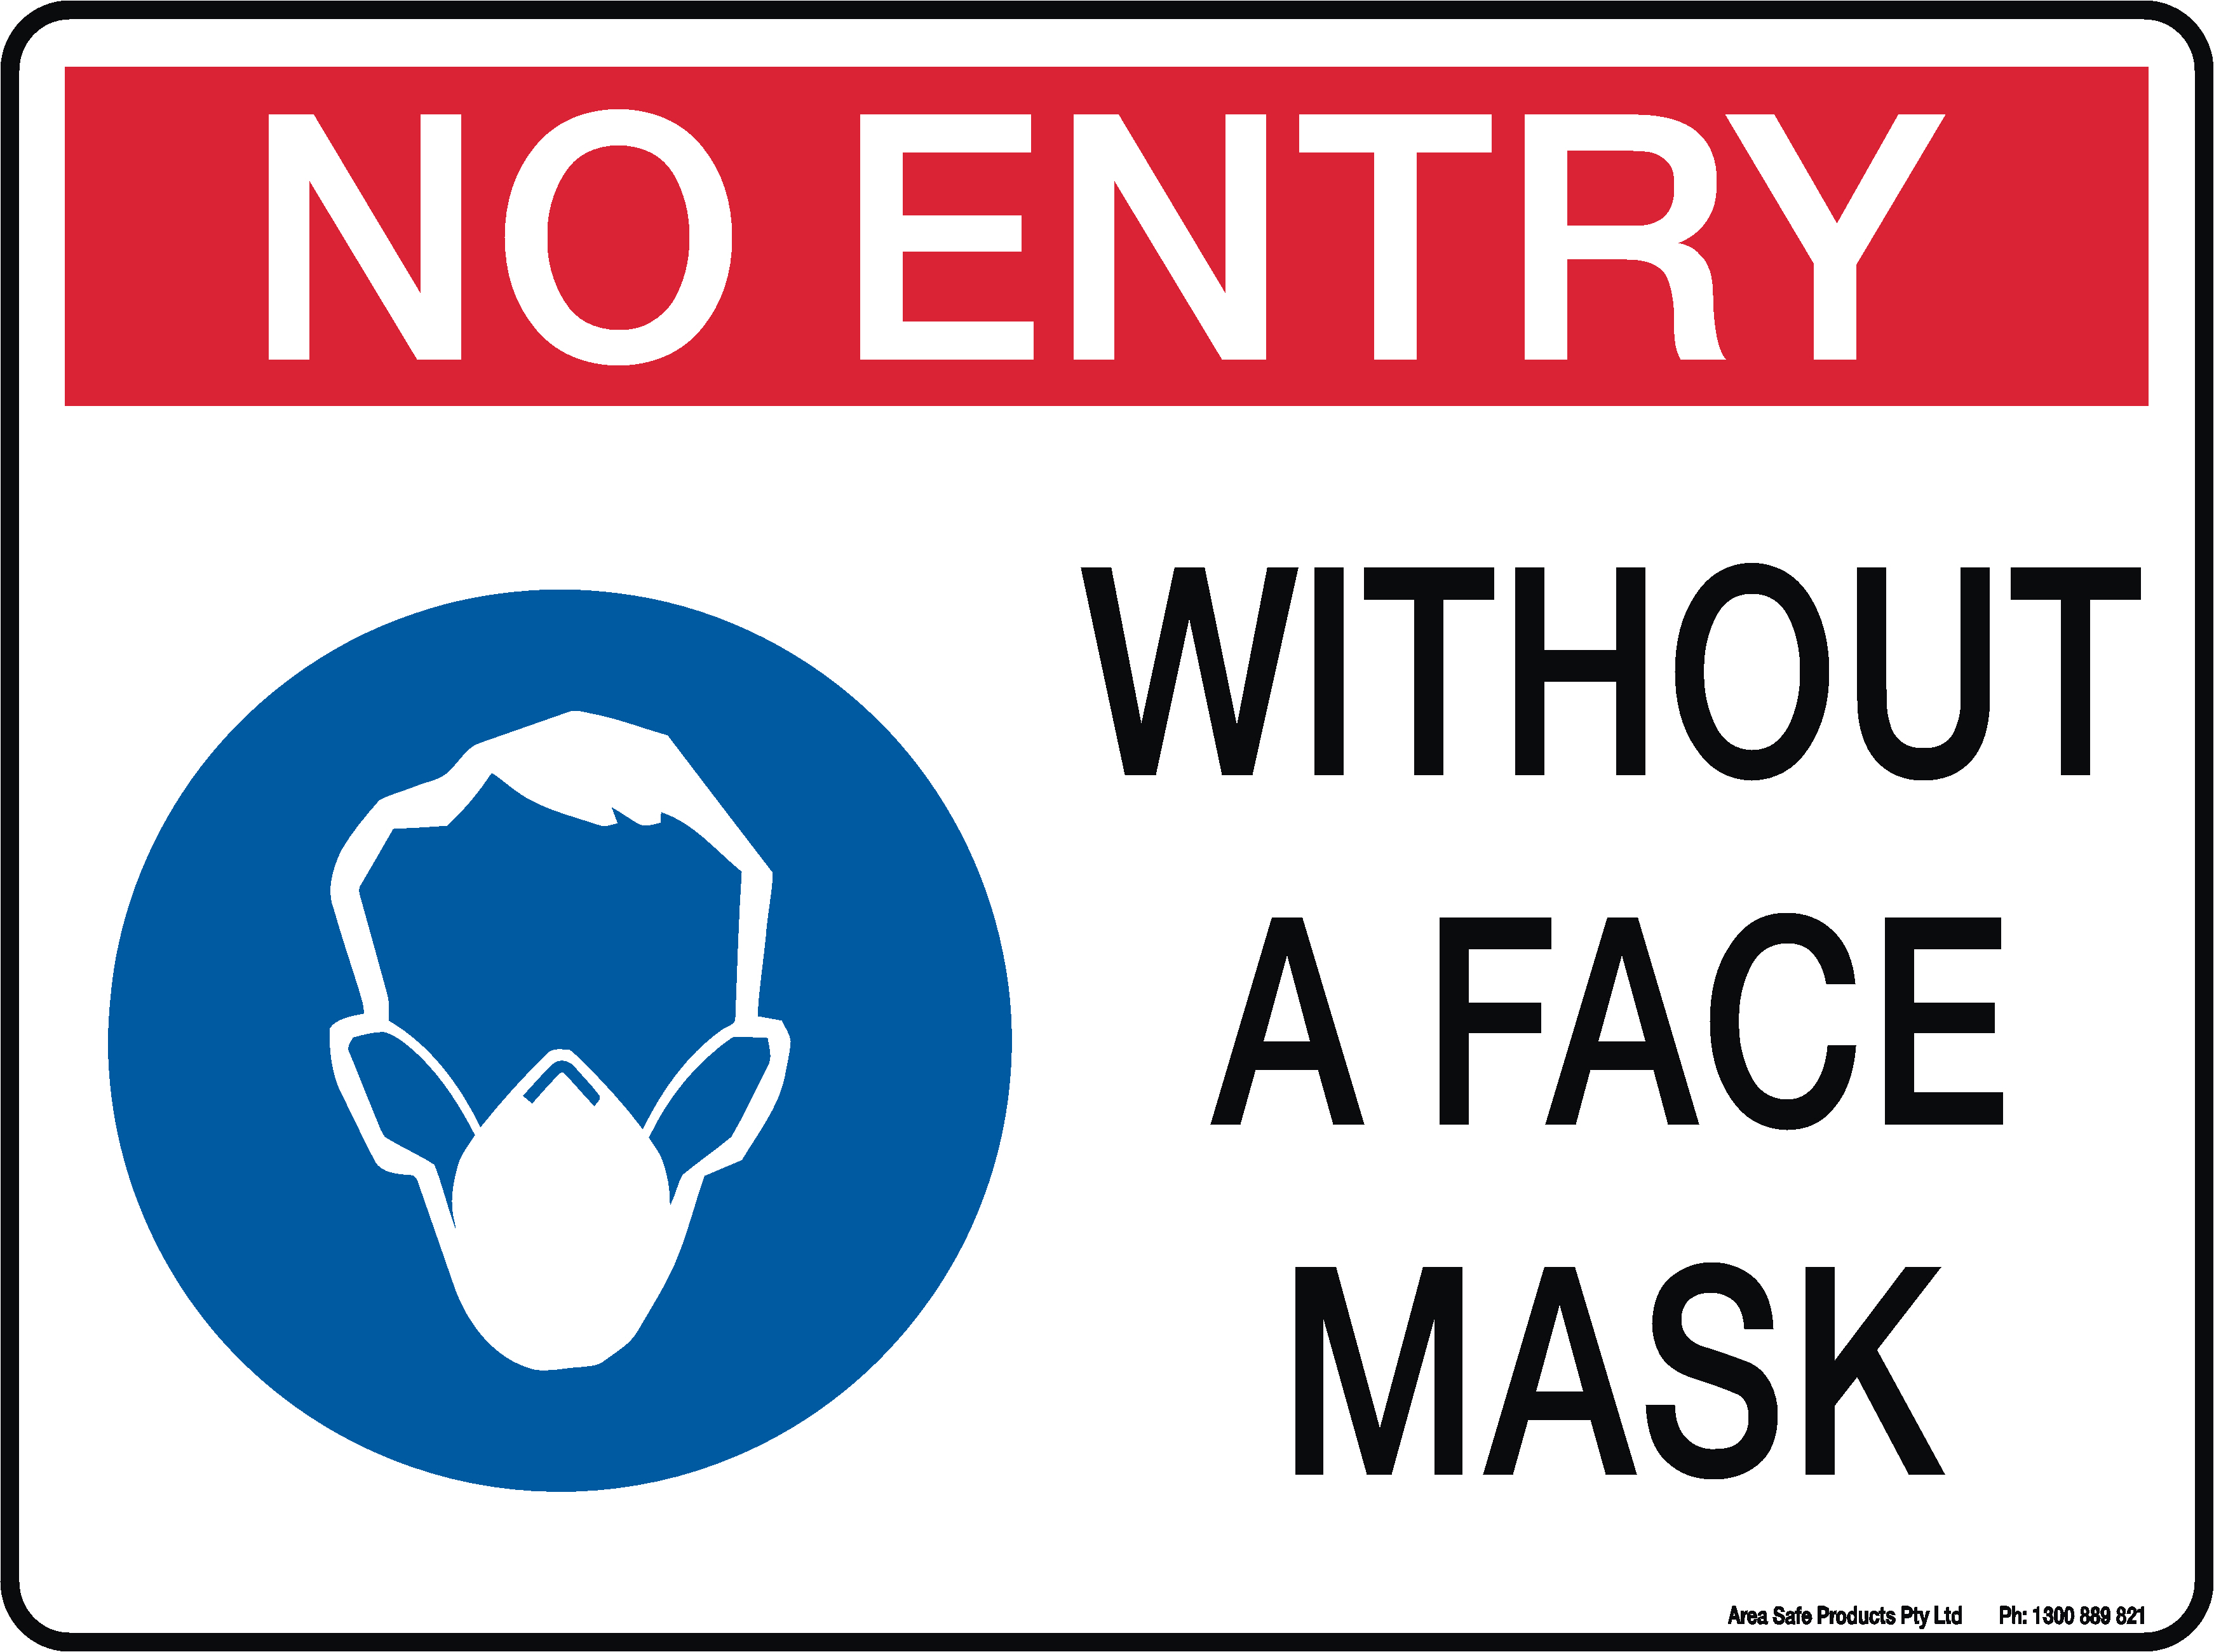 O Mask No Entry